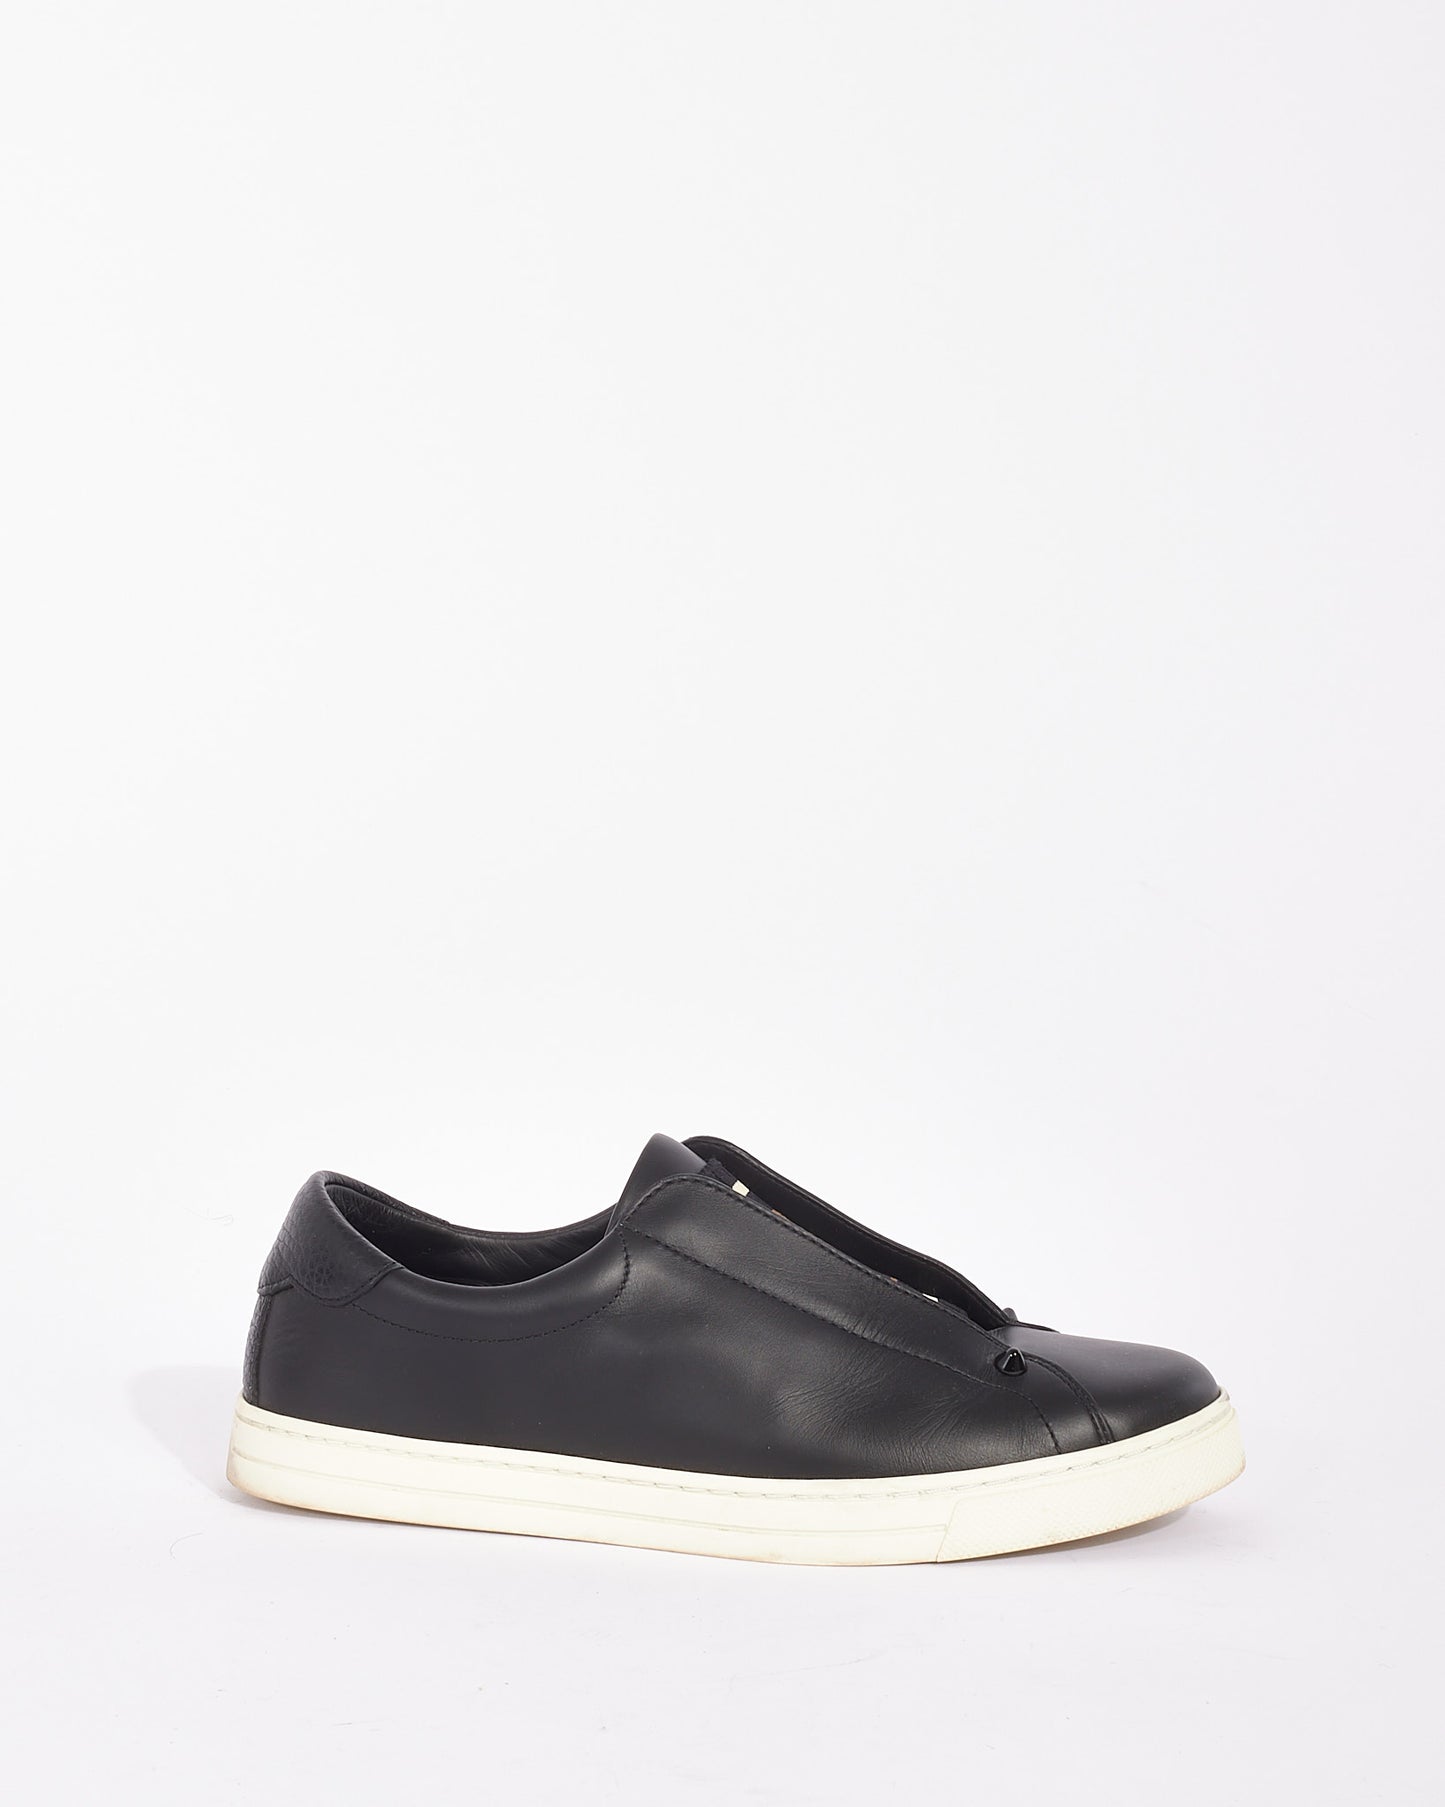 Fendi Black Leather Zucca Rockoclick Slip On Sneakers - 37